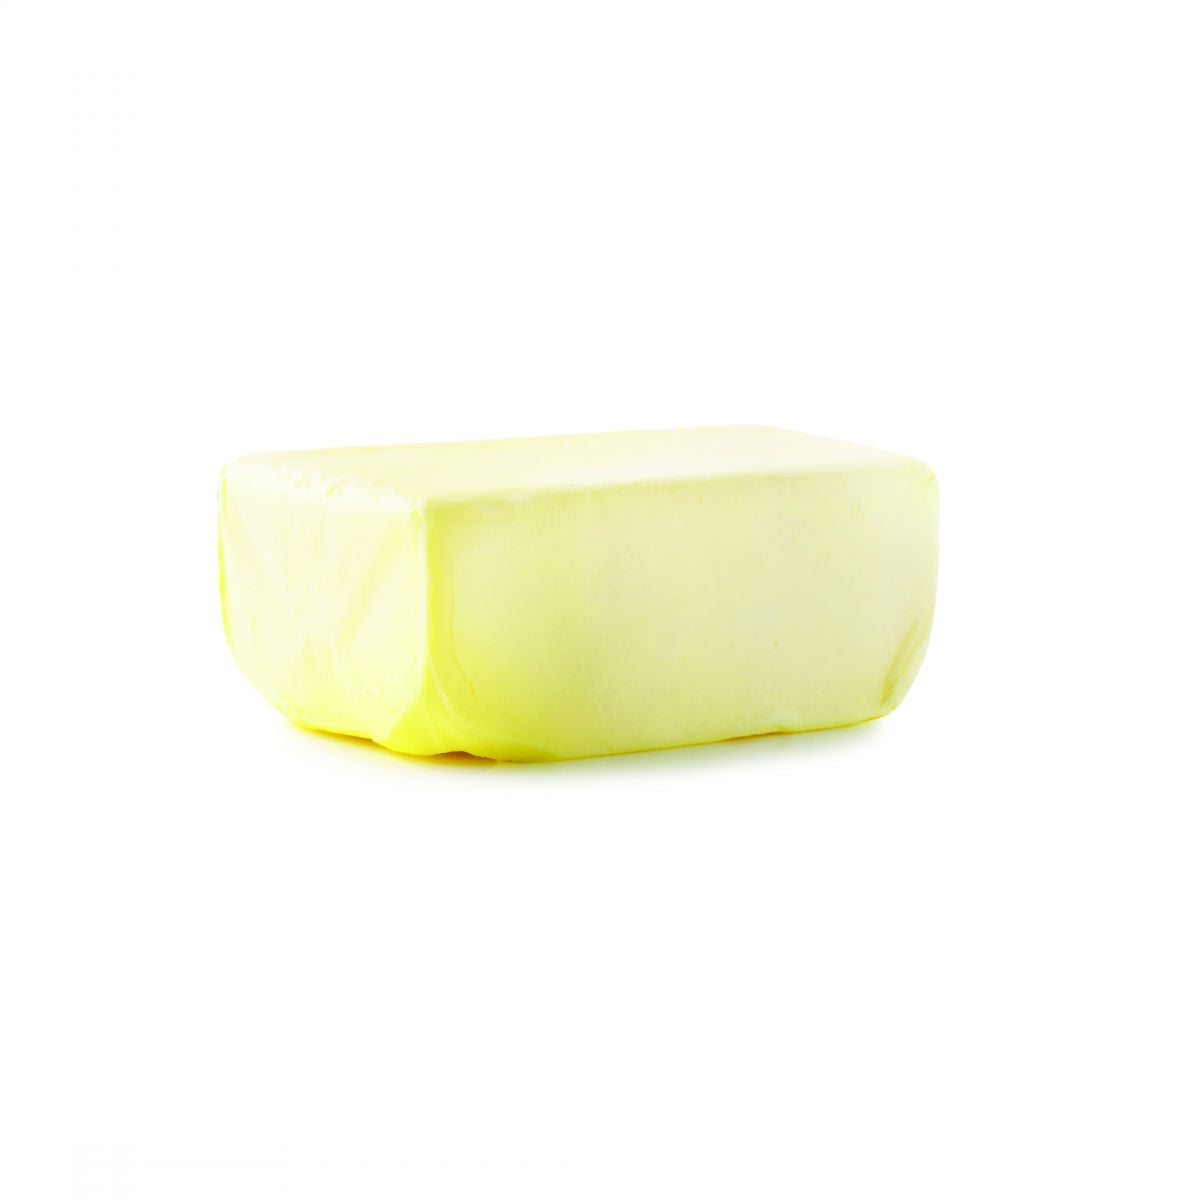 Cabot Creamery Unsalted Butter 80% 1  lb Bar